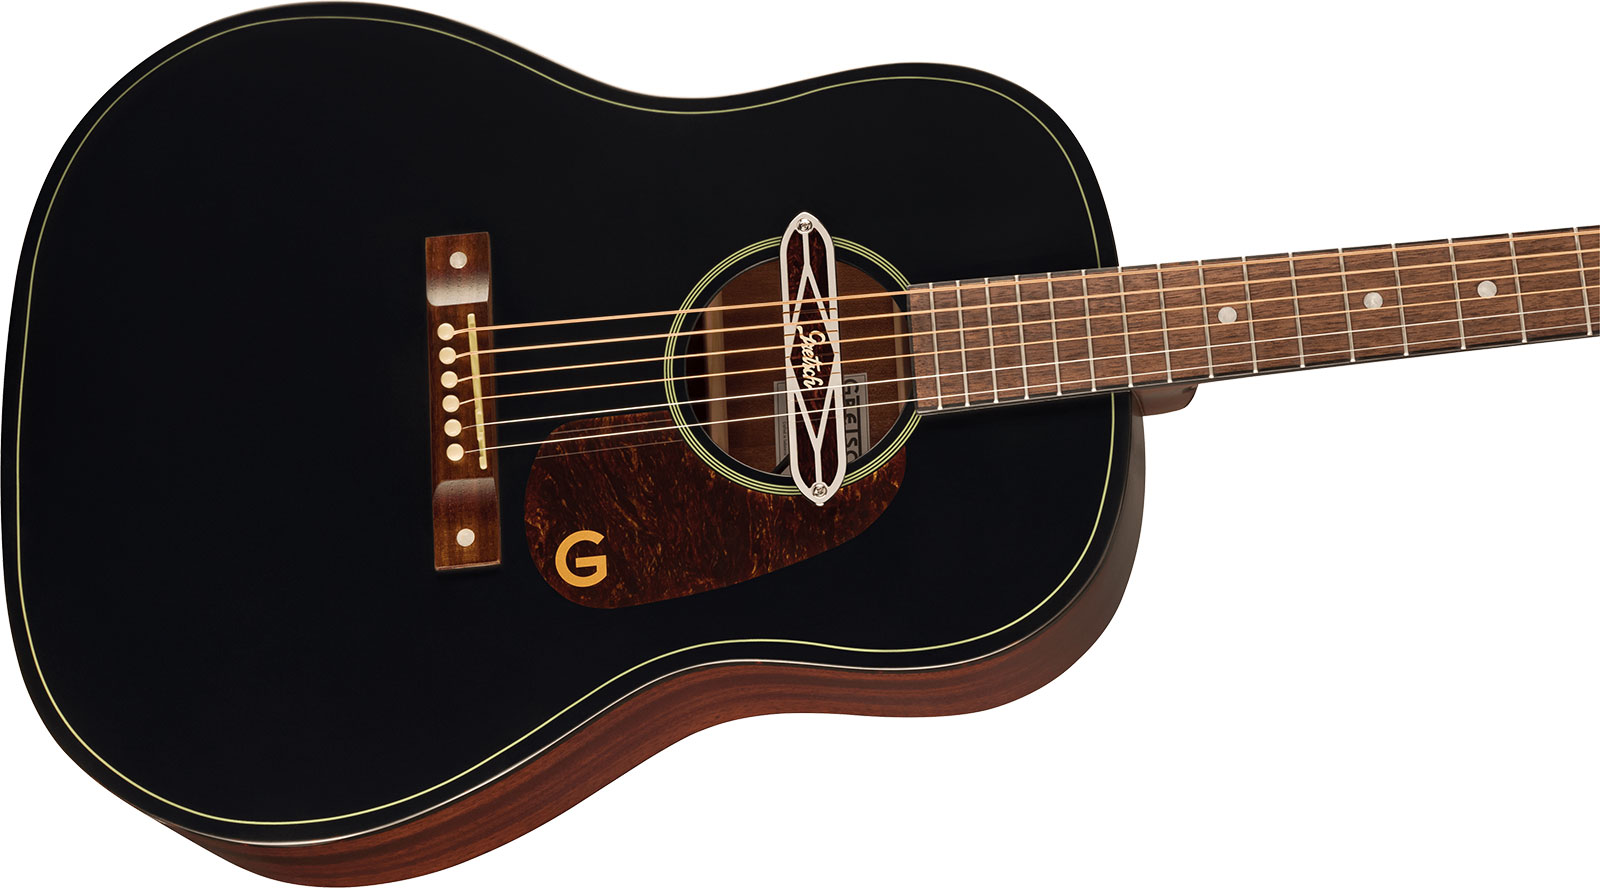 Gretsch Jim Dandy Deltoluxe Dreadnought Tout Sapele Noy - Black Top Semi Gloss - Electro acoustic guitar - Variation 2